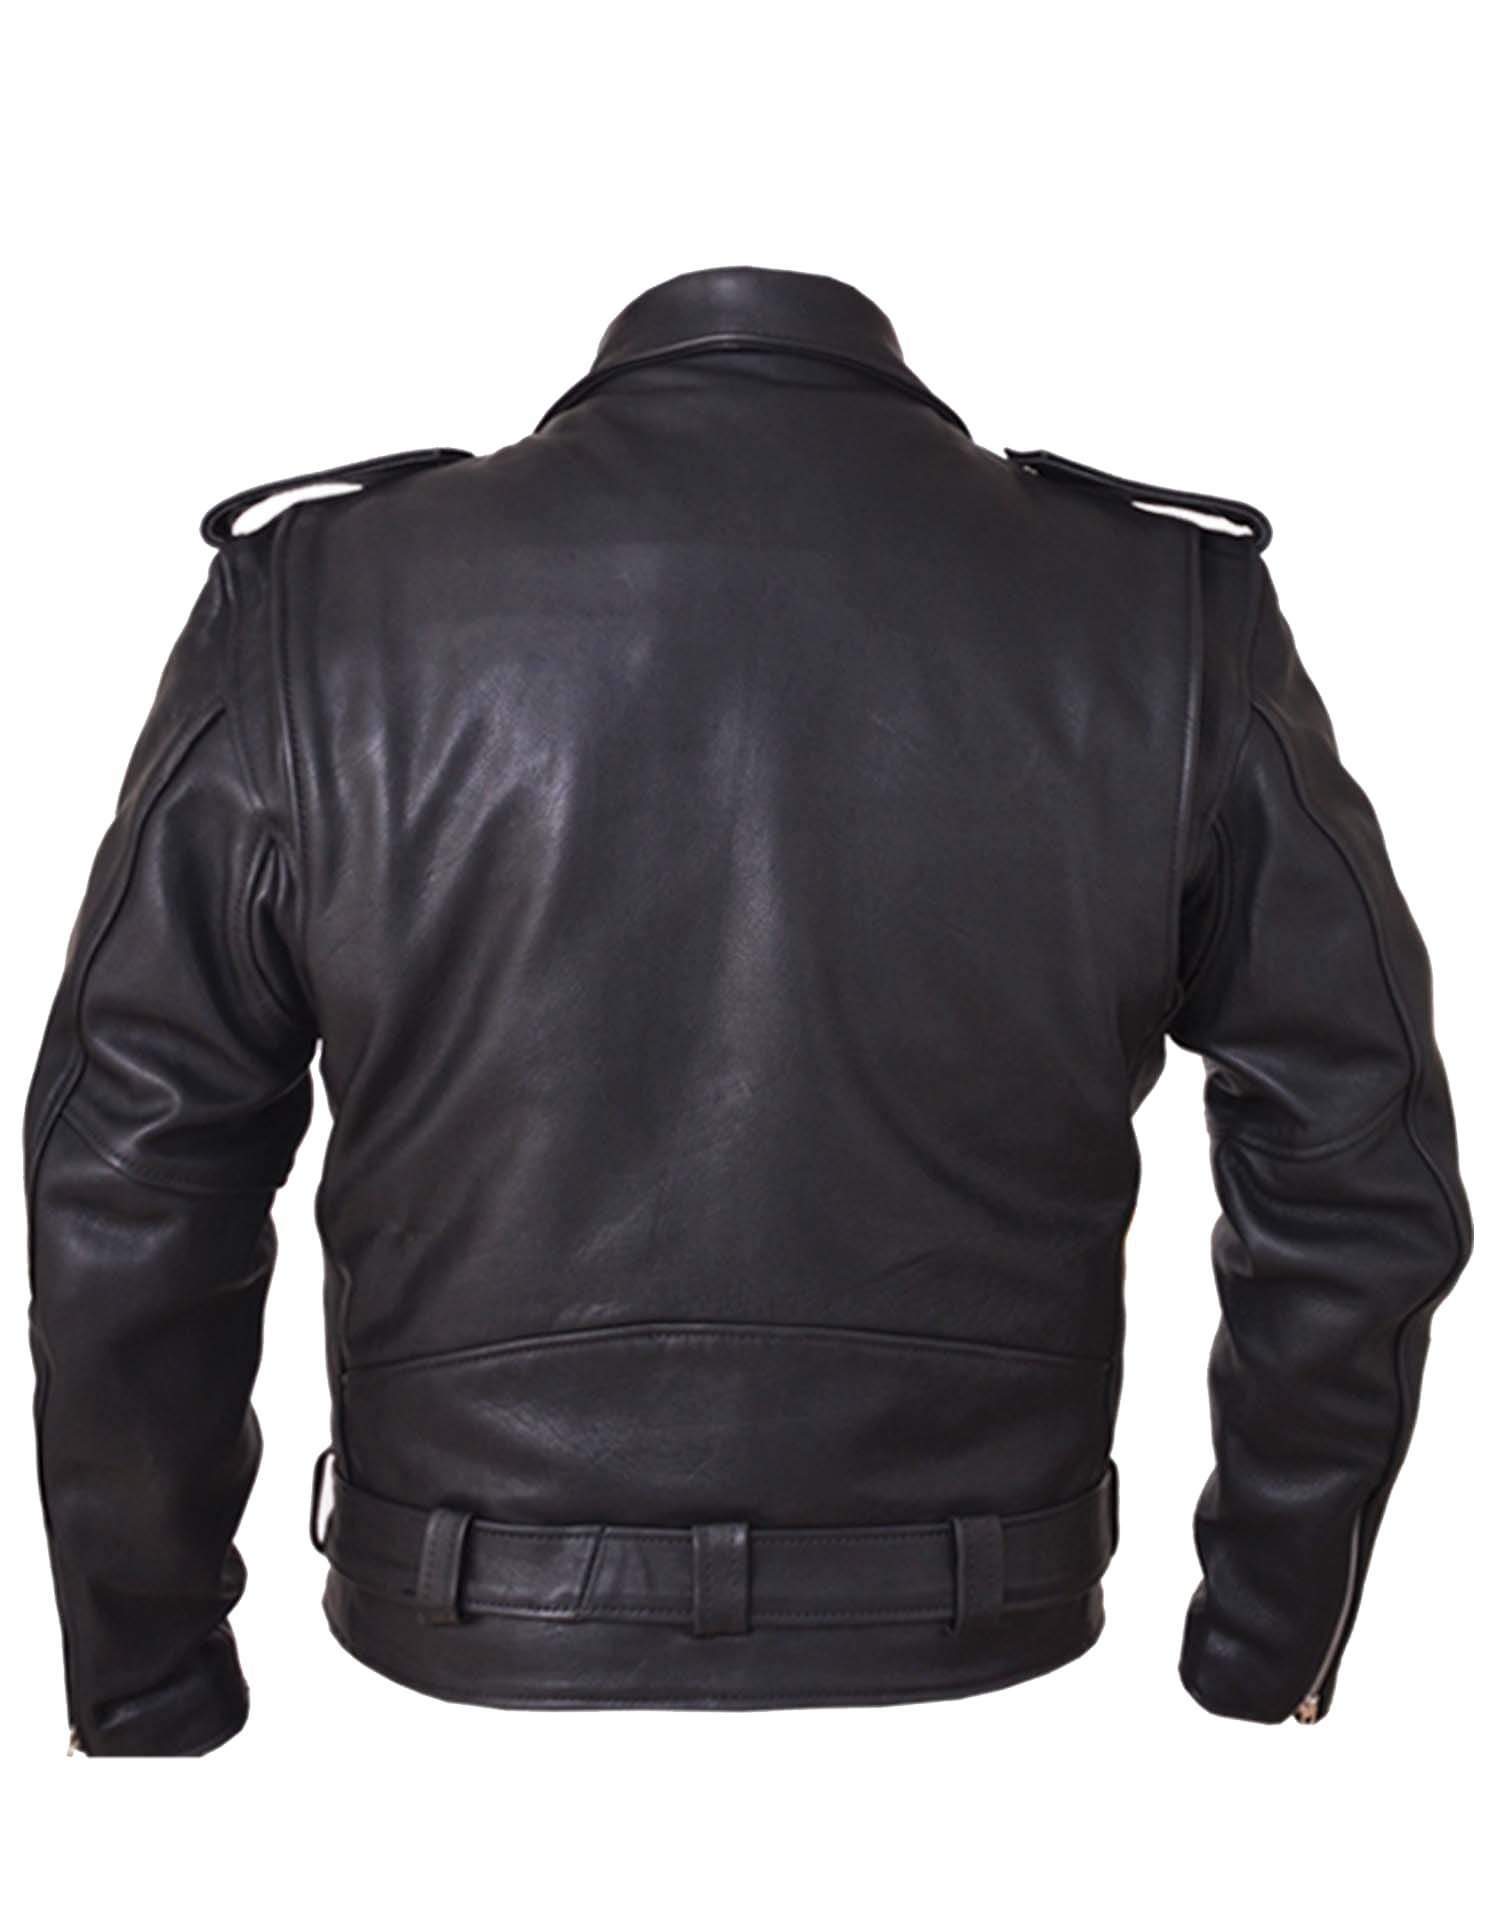 Ultra Leather Motorcycle Jacket - Men's - Biker Jacket - 312-00-UN